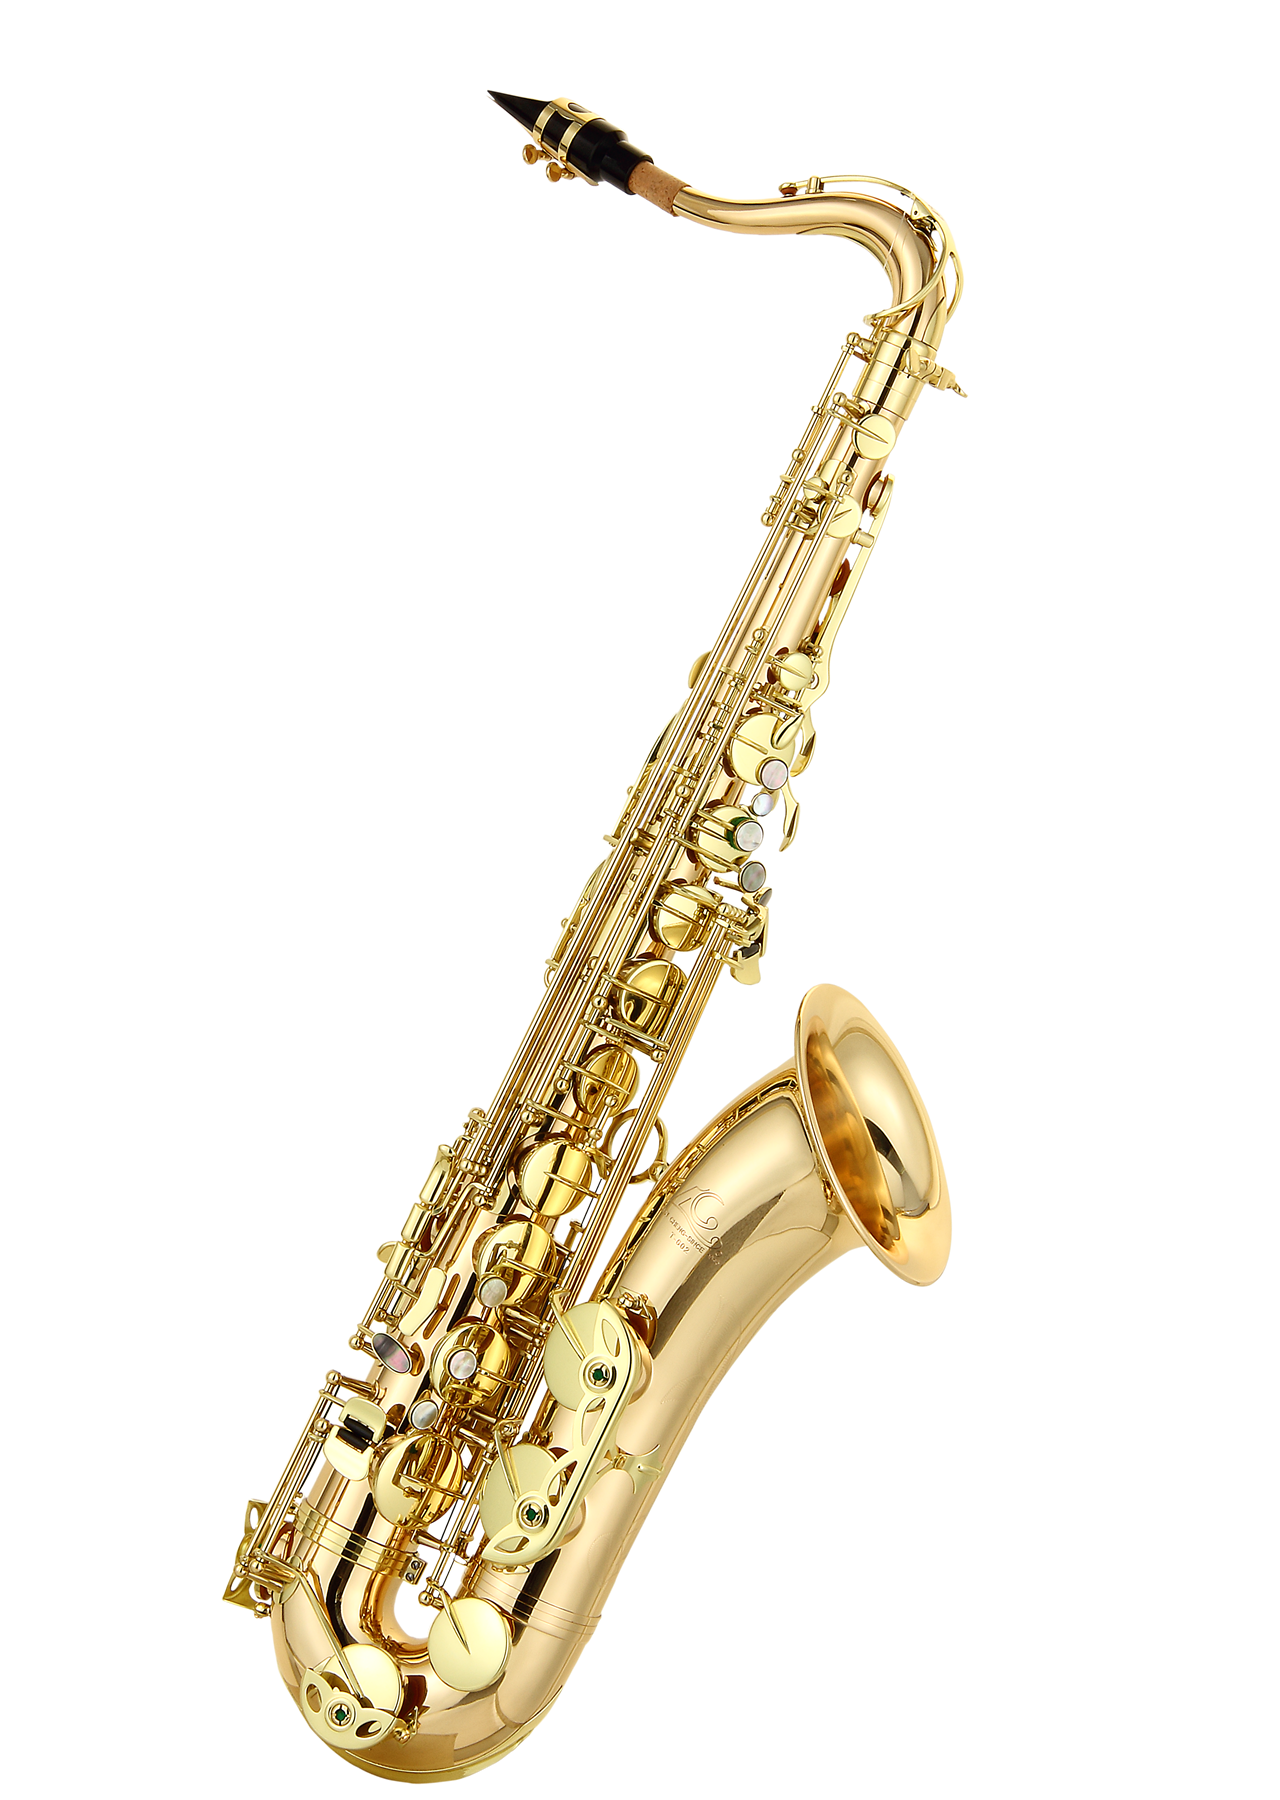 Saksofon, instrument muzyczny